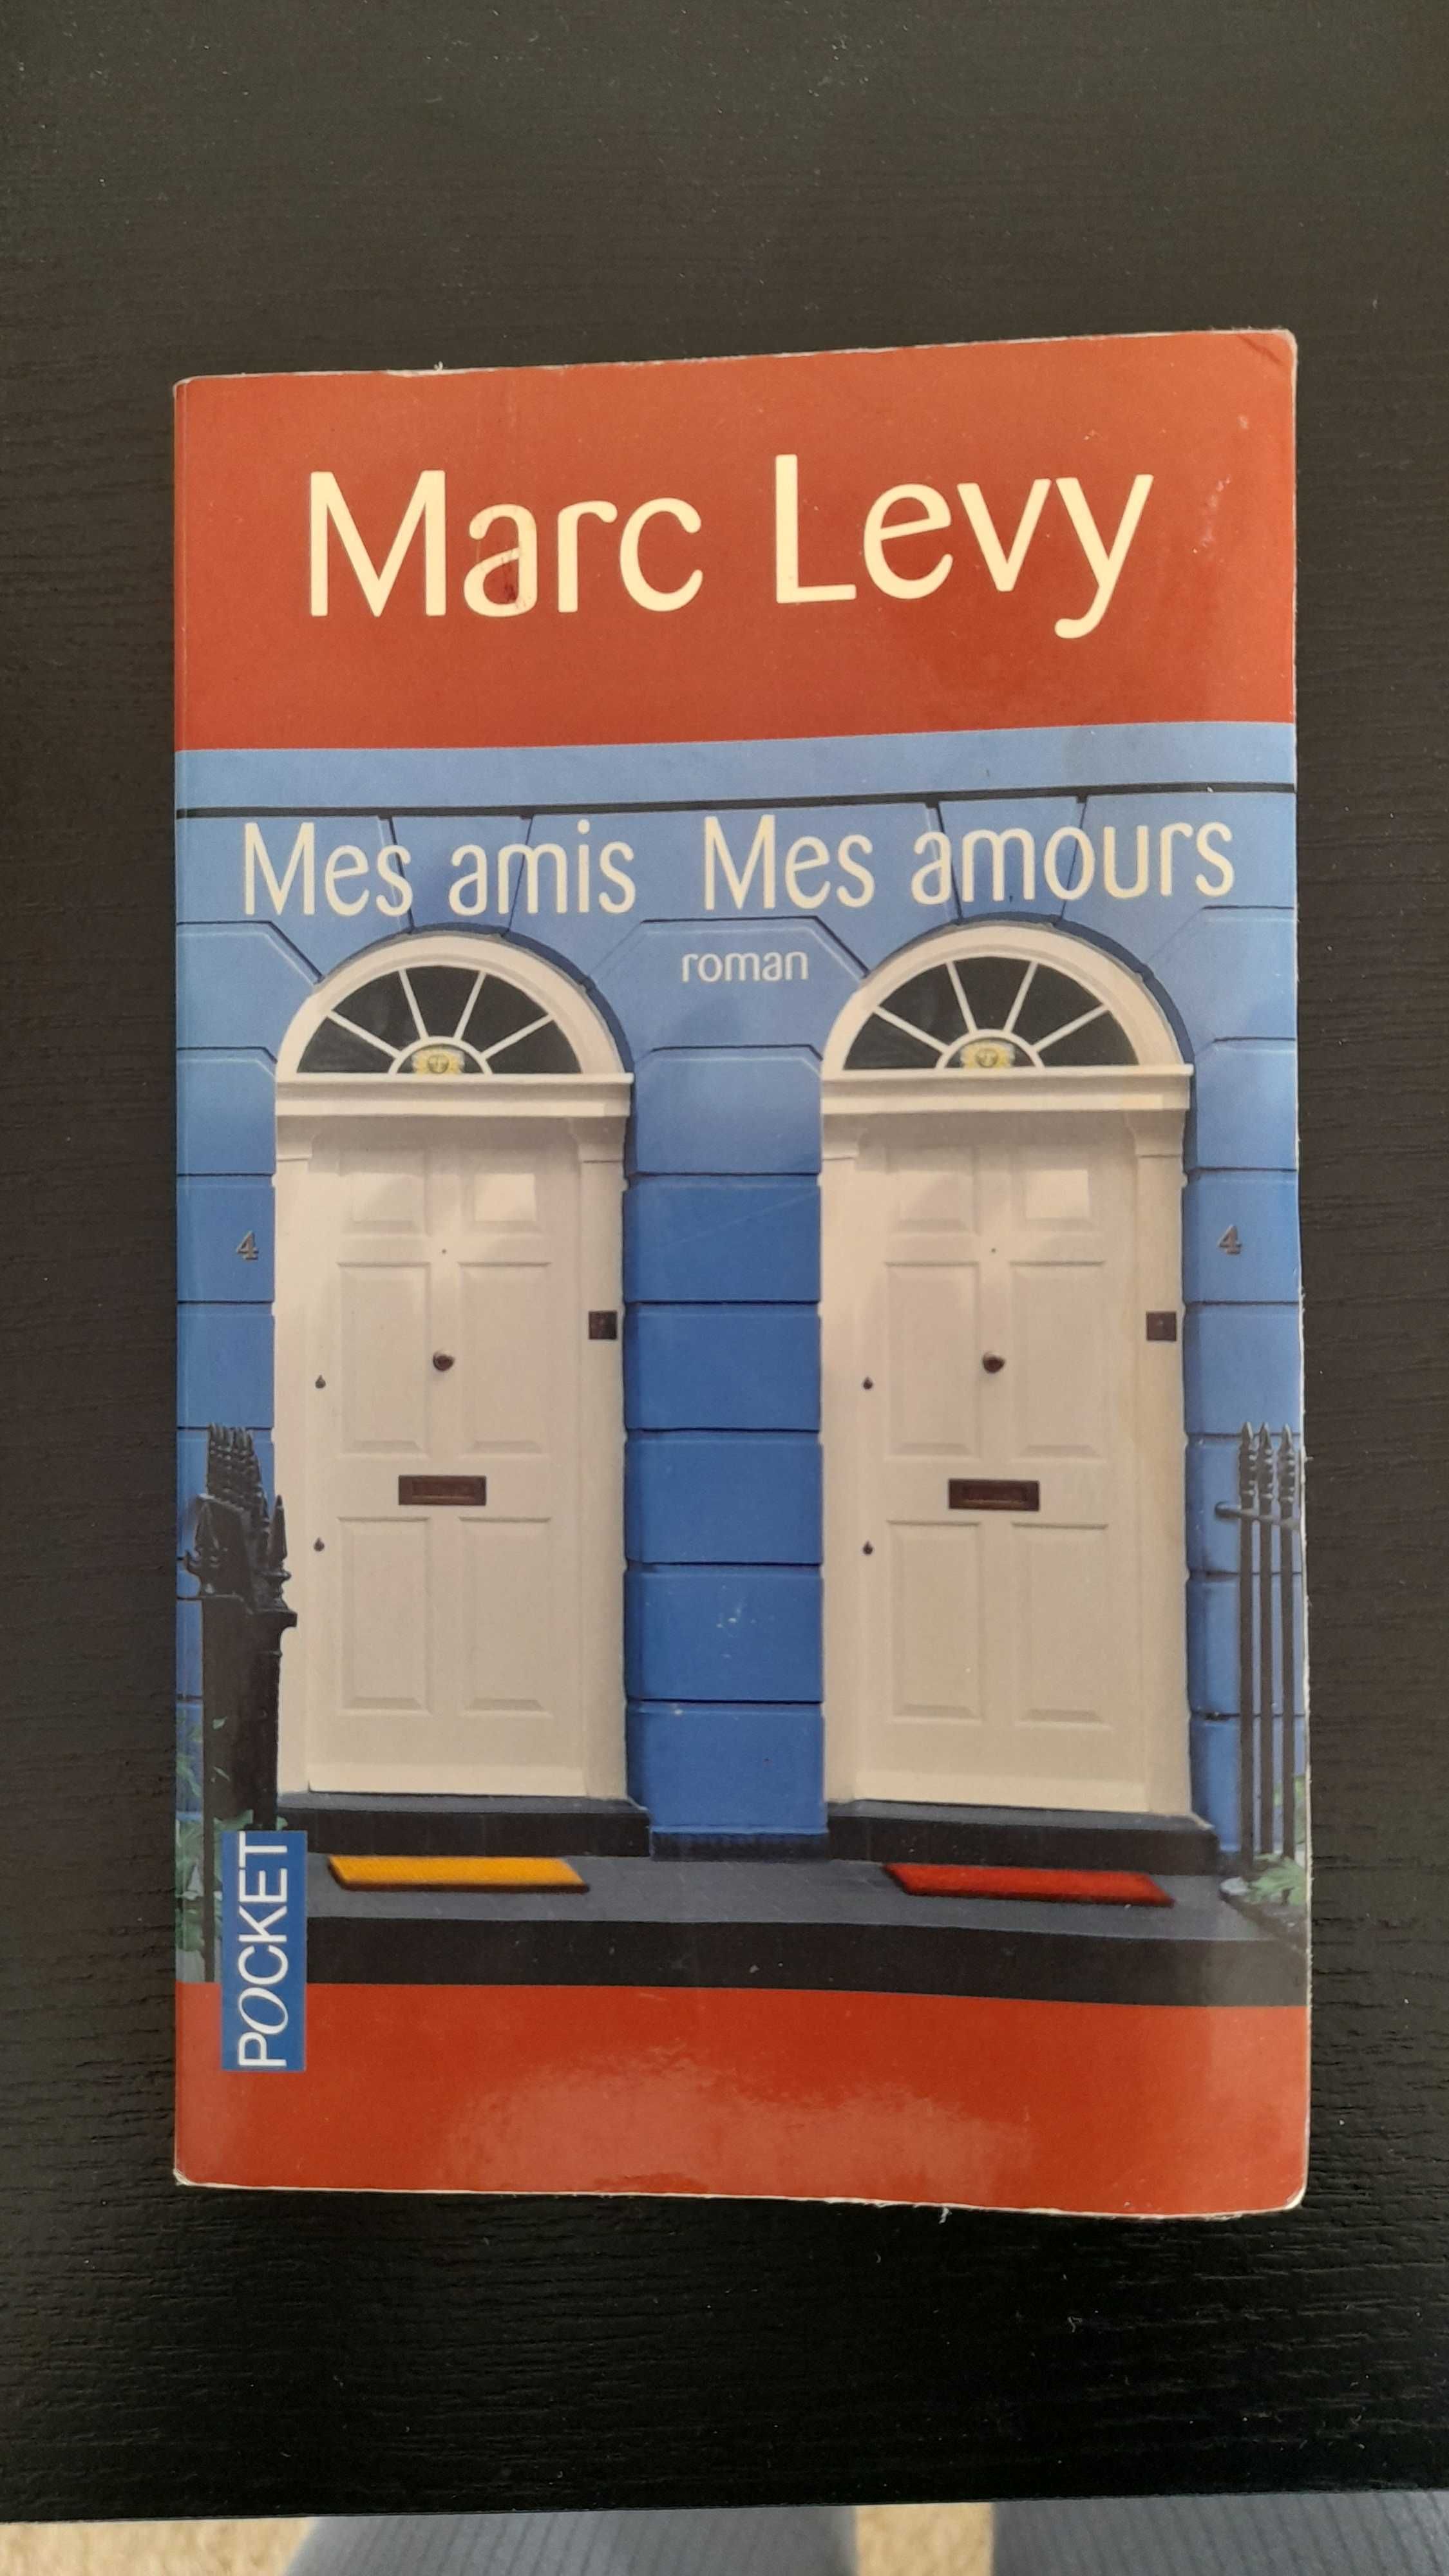 Marc Levy - "Mes amis Mes amours" - Książka po francusku